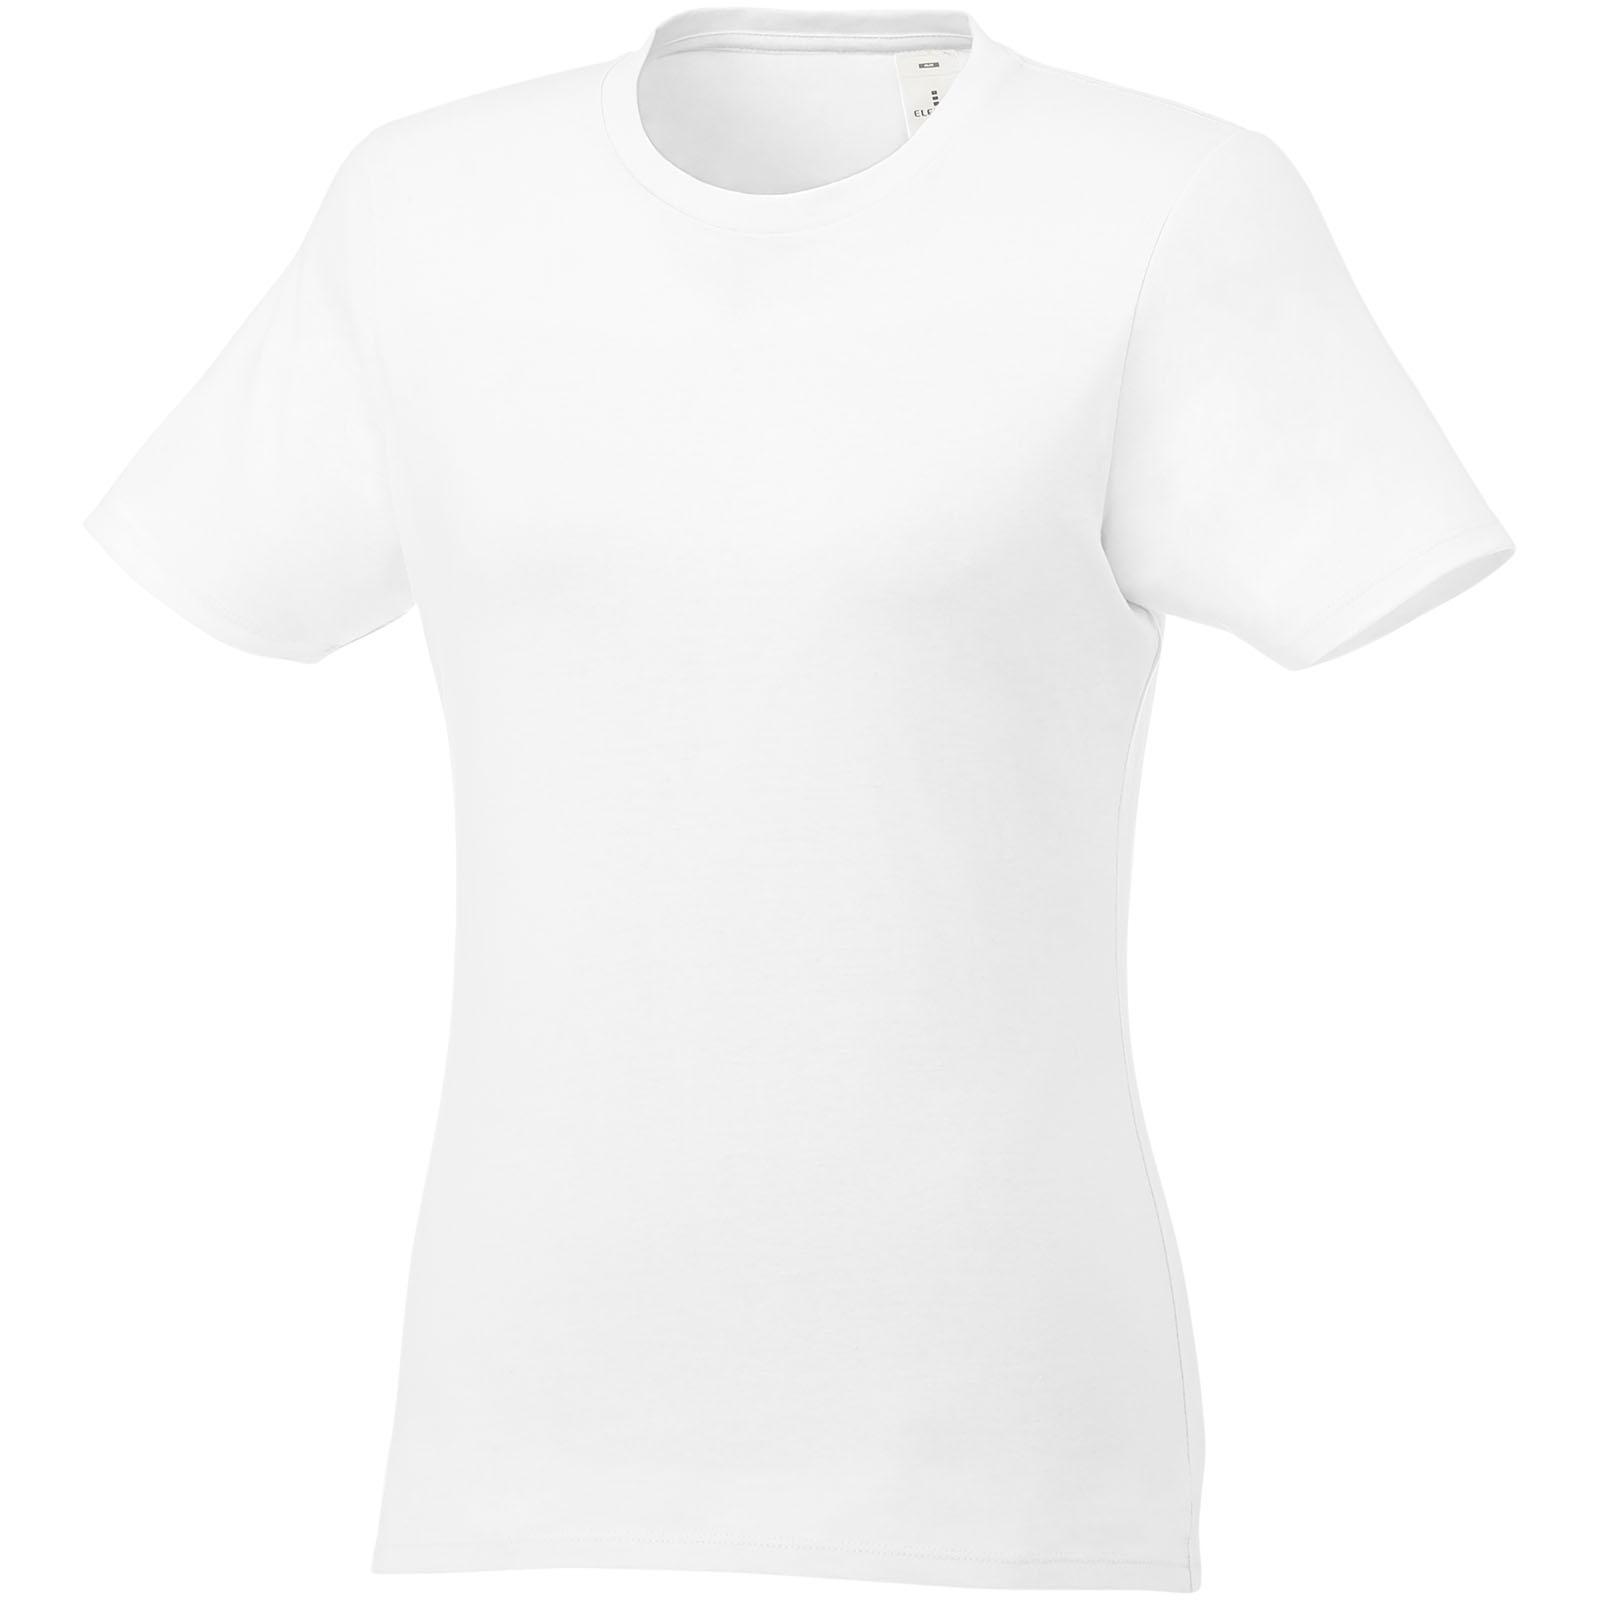 Clothing - Heros short sleeve women's t-shirt